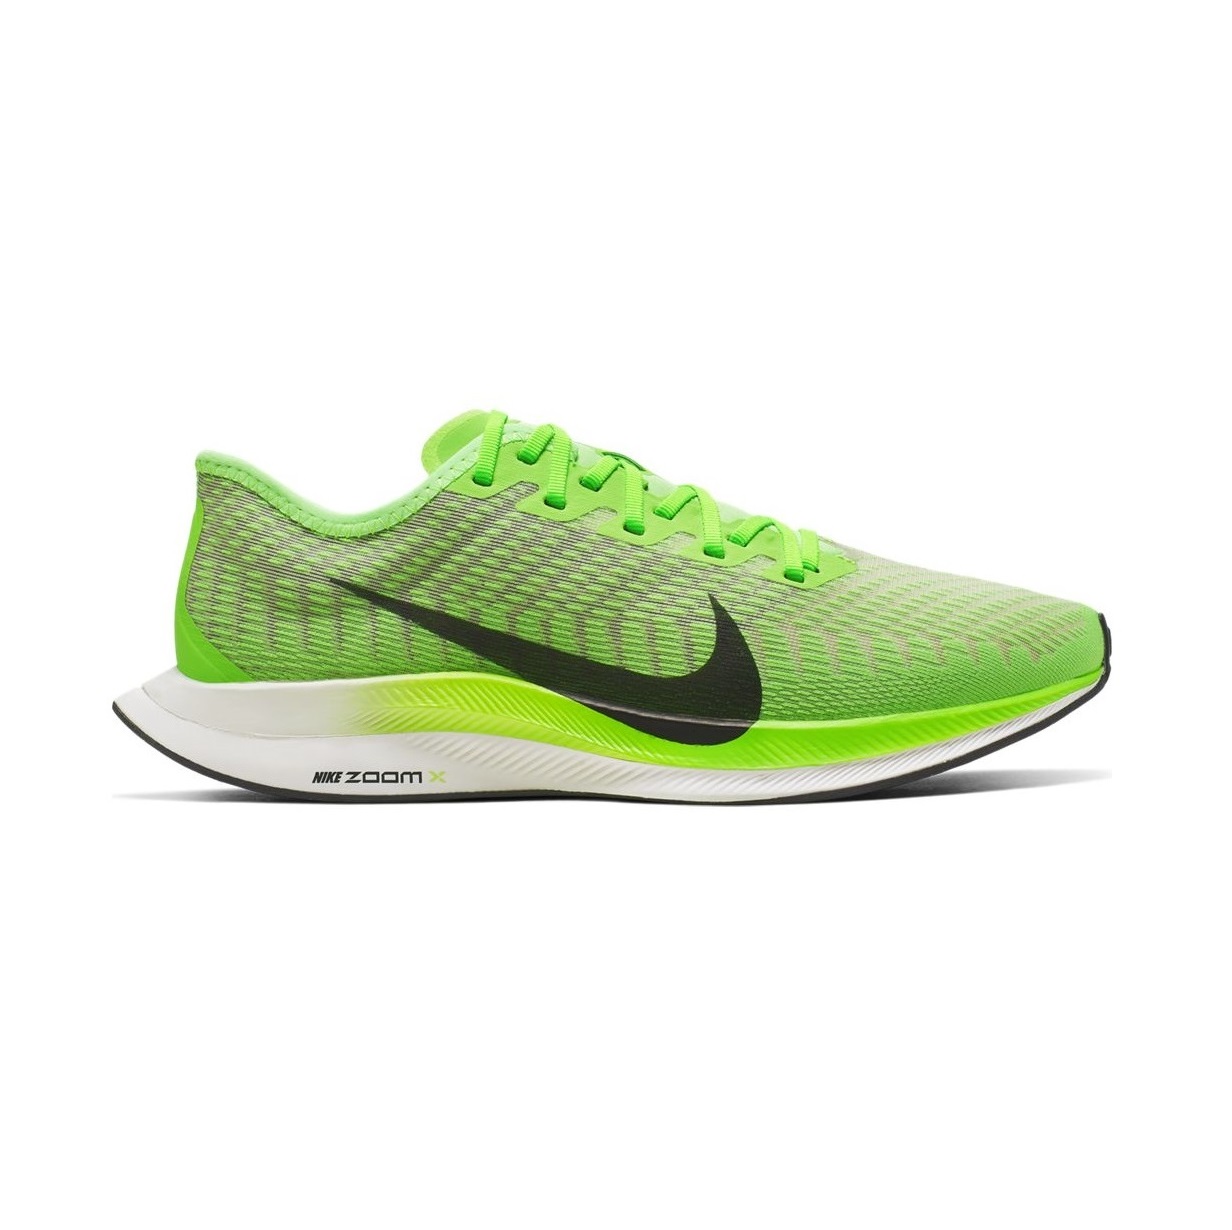 Zapatillas running para hombre - Nike Zoom Pegasus Turbo 2 - AT2863-300 | ferrersport.com | Tienda online deportes